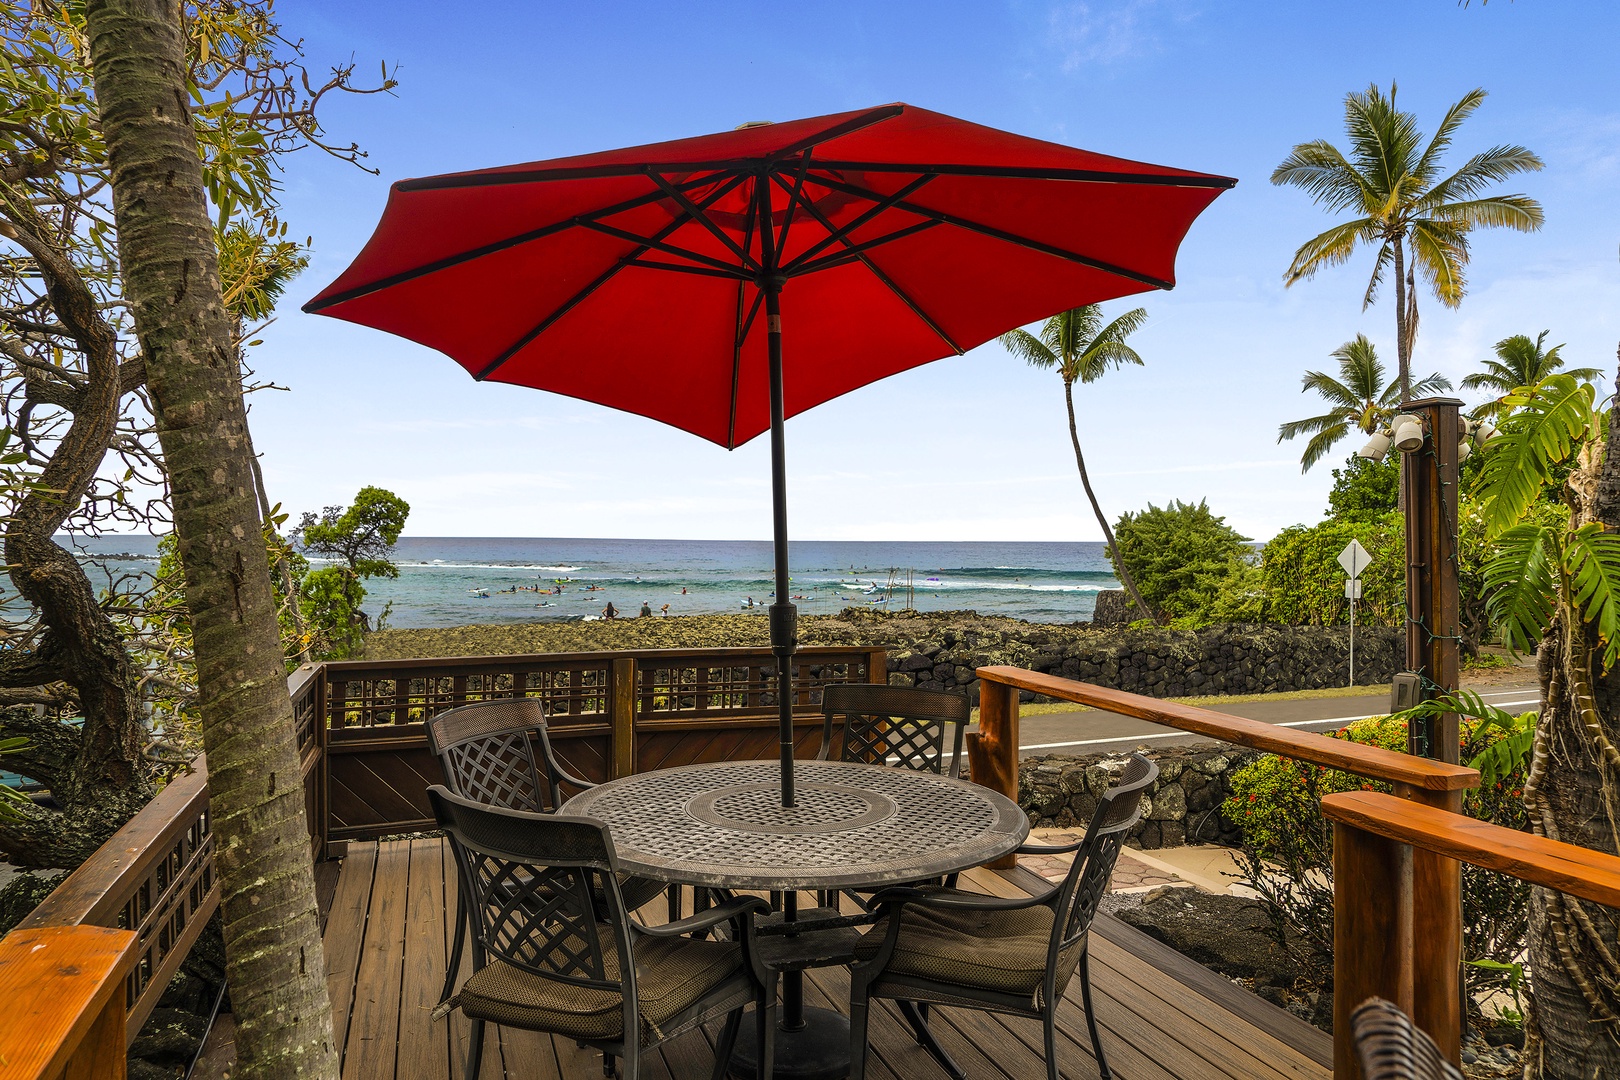 Kailua Kona Vacation Rentals, Kahalu'u Reef 203 - Elevated pool deck offers seating and amazing sunset views!